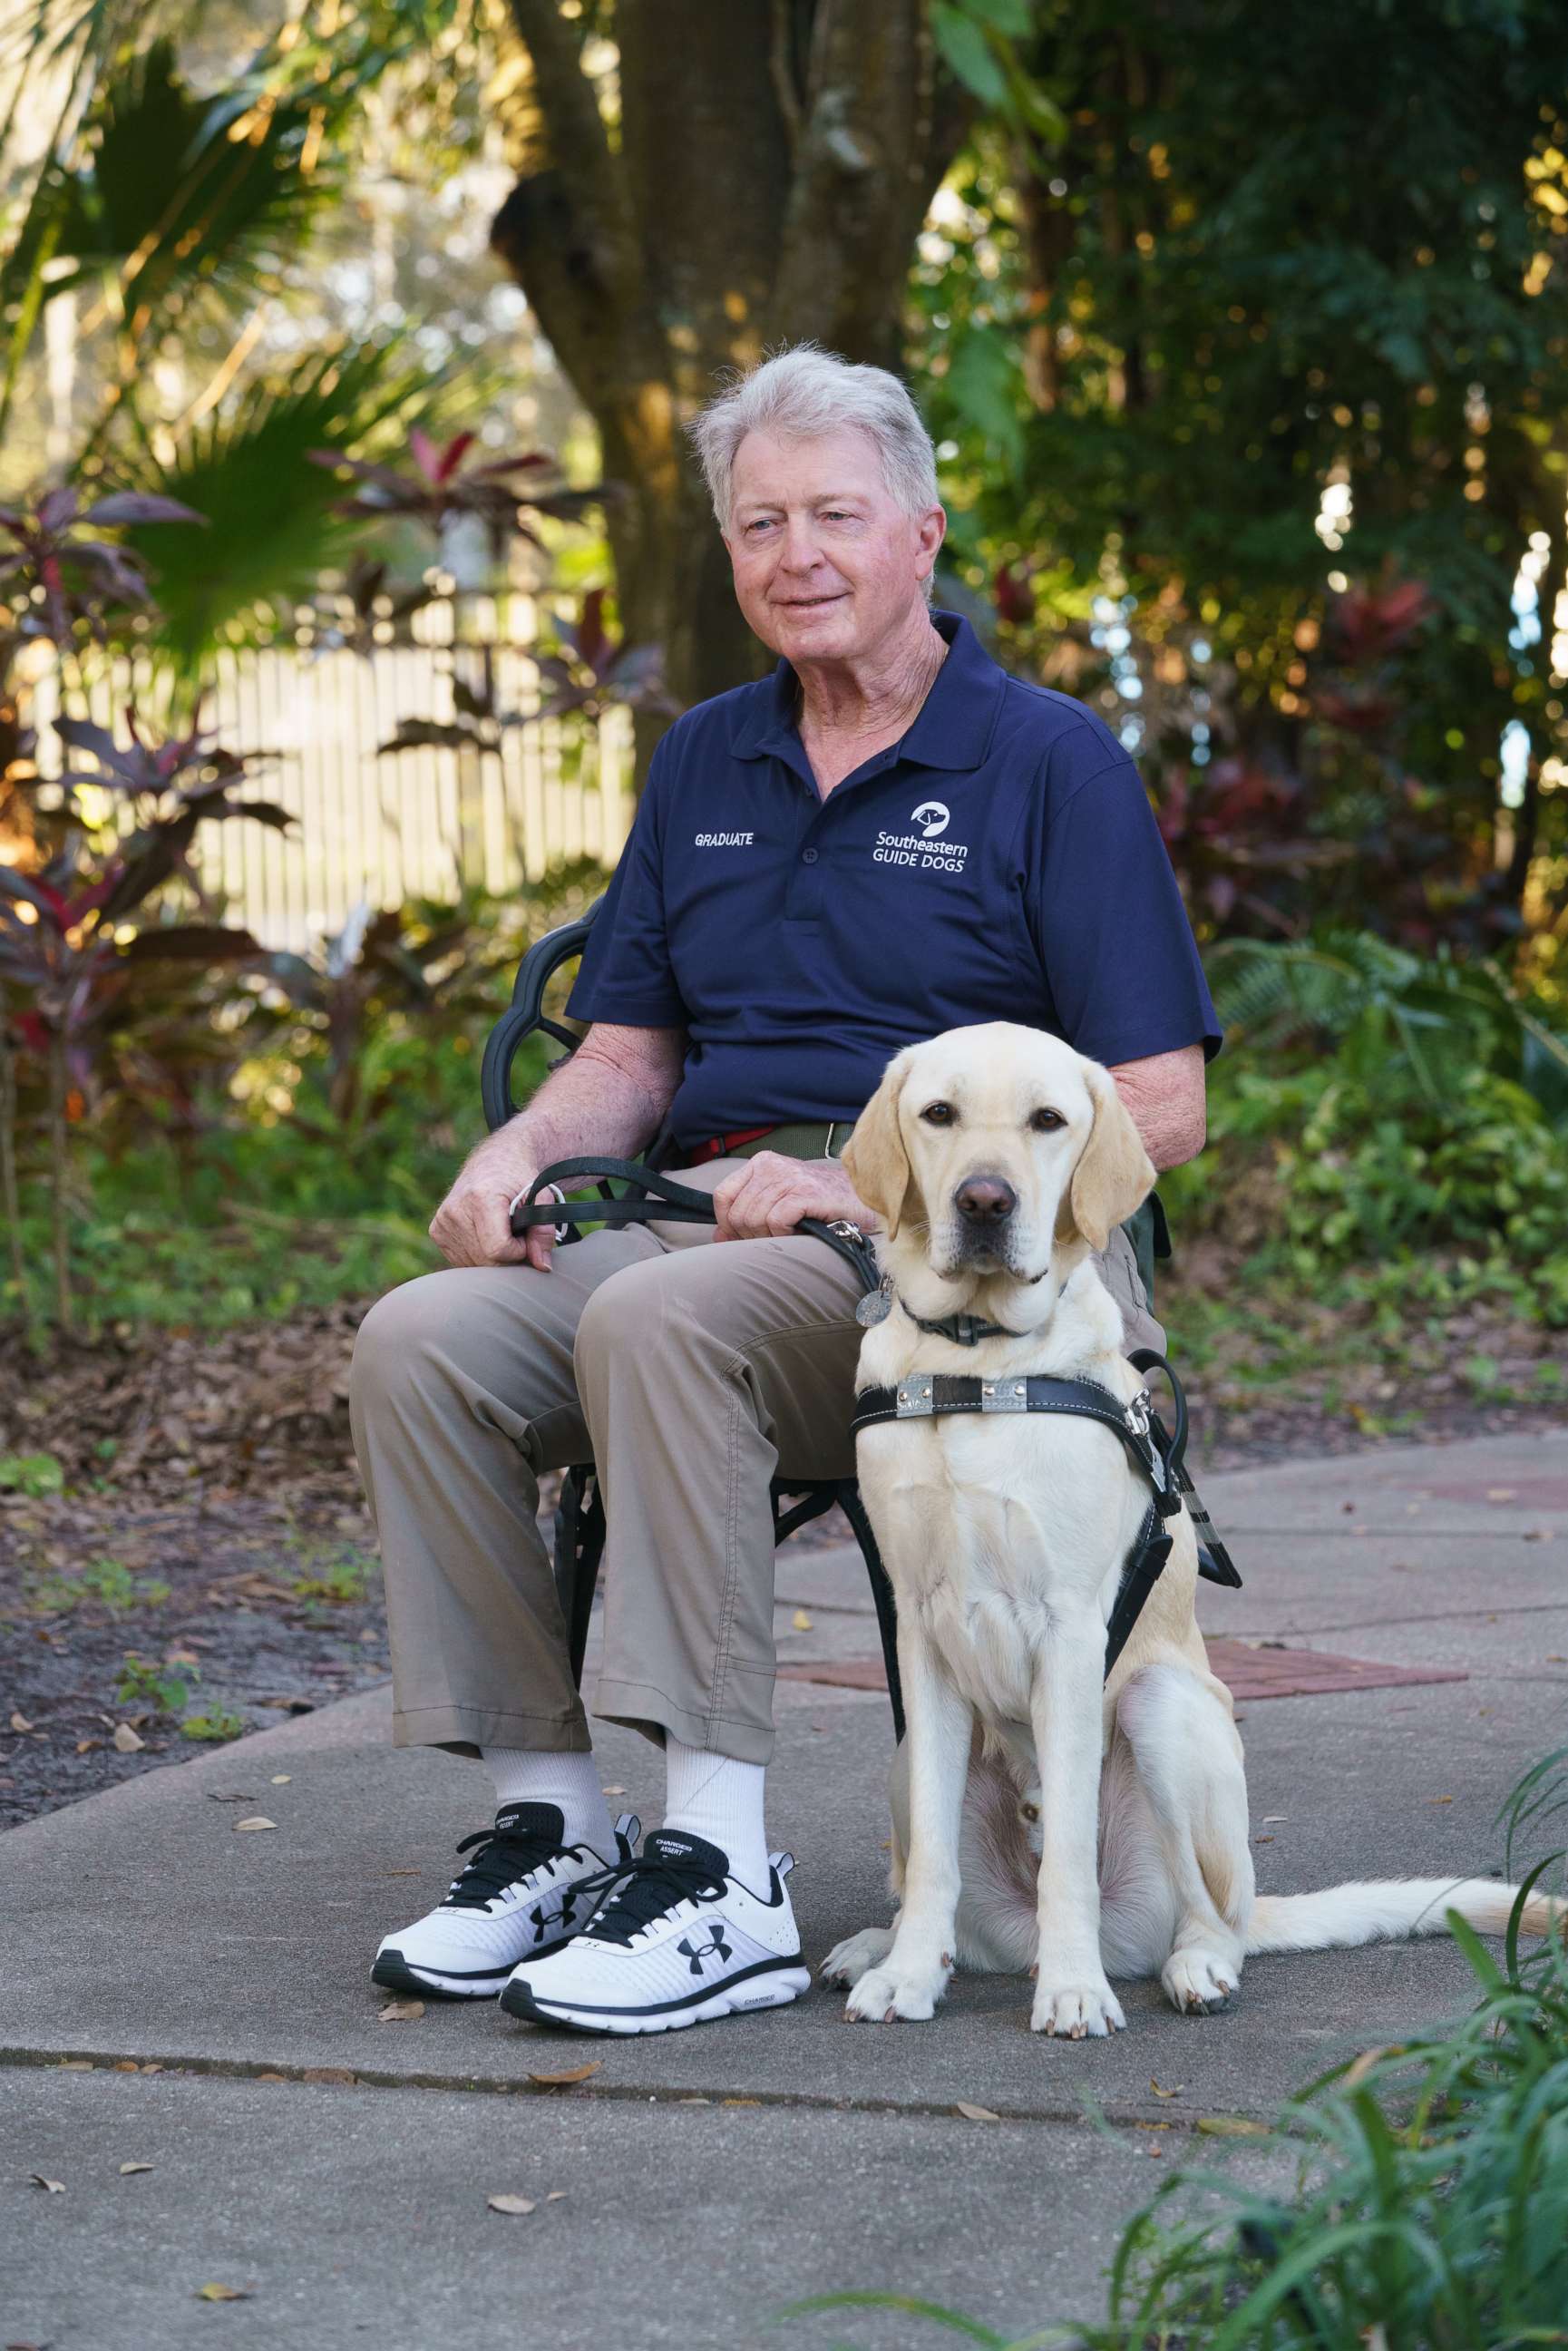 PHOTO: Bob Newport with his guide dog Igor III.